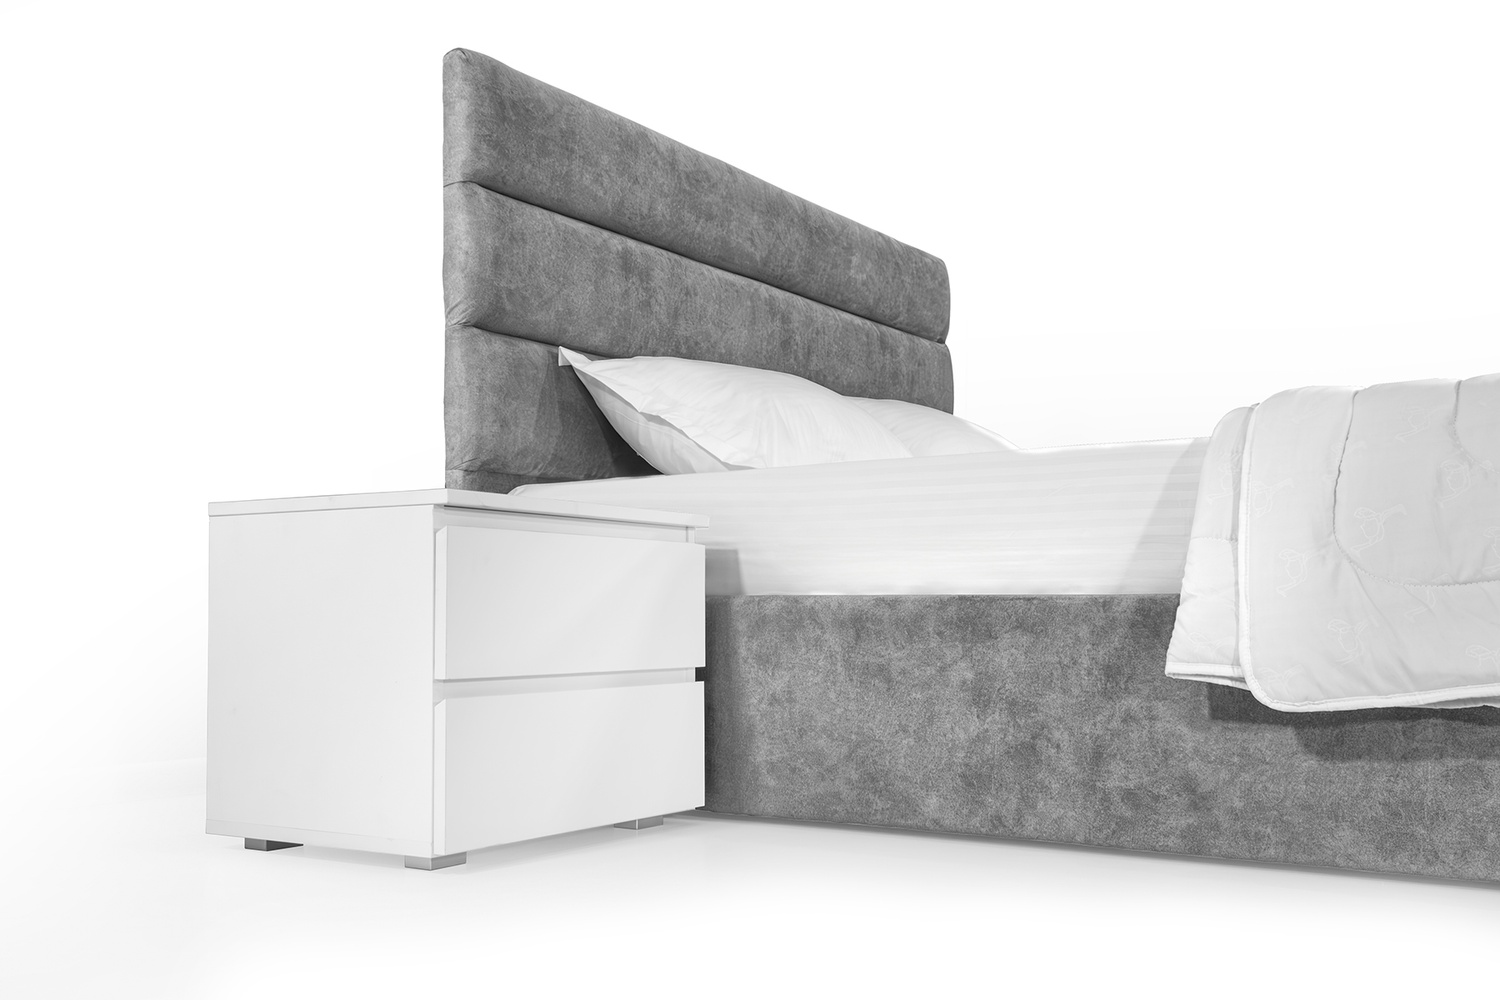 Кровать Лилия 140х200 (Светло-серый, велюр, без подъемного механизма) IMI lll140x200ssb фото